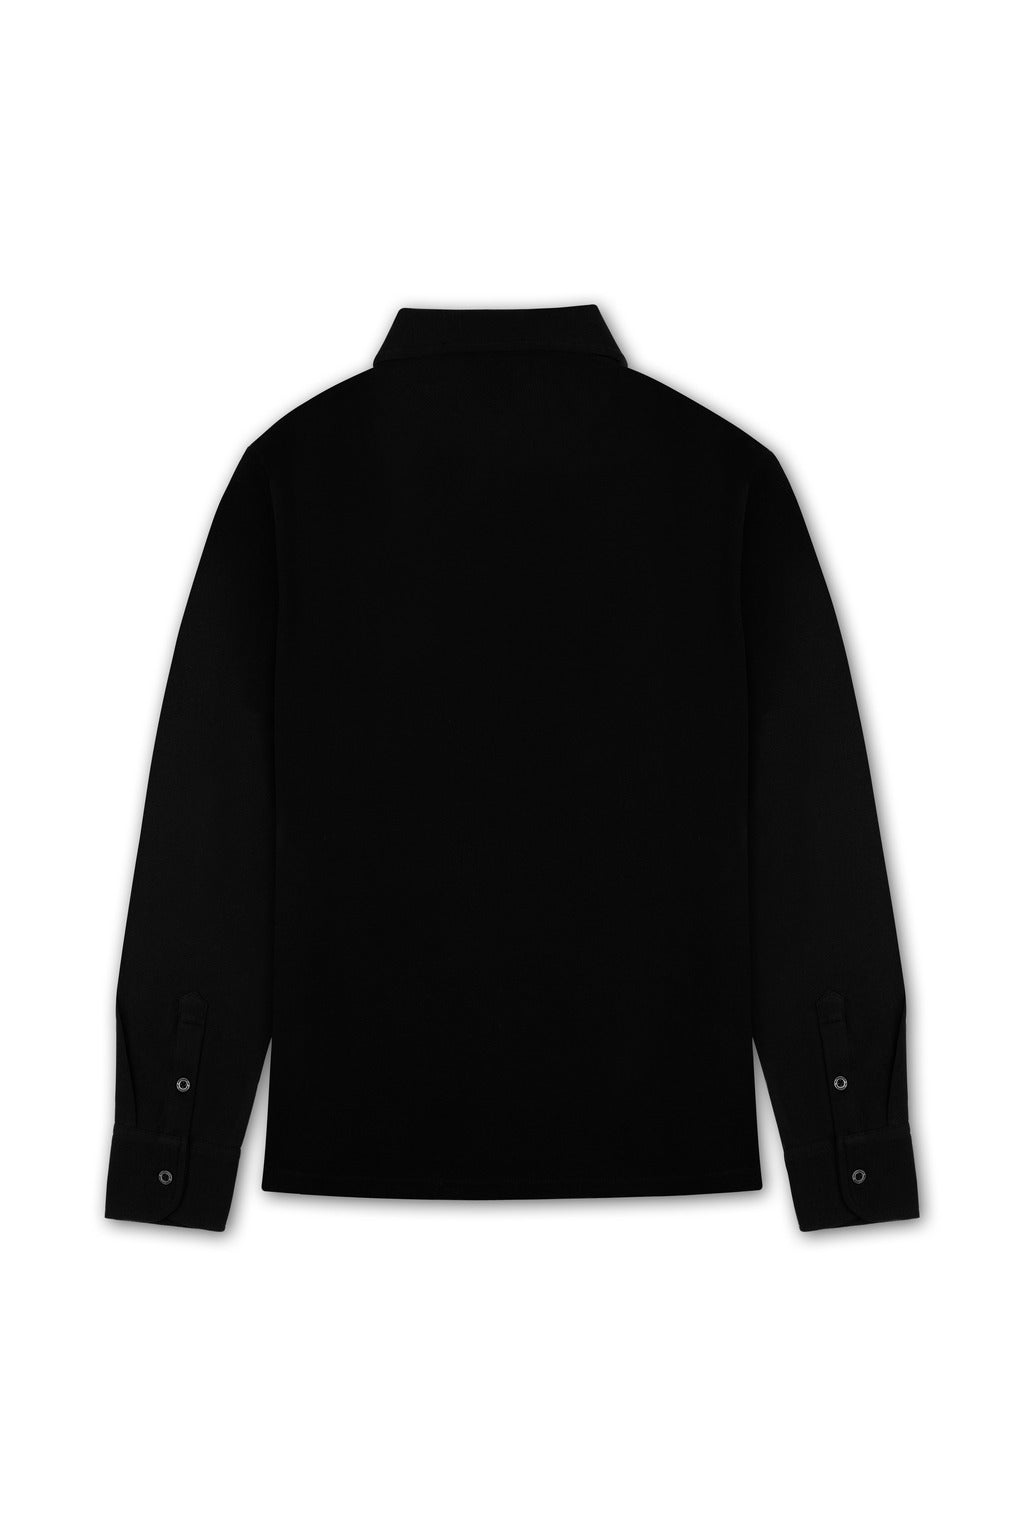 Coal-Black-Designer-Luxury-Polo-Shirt-5